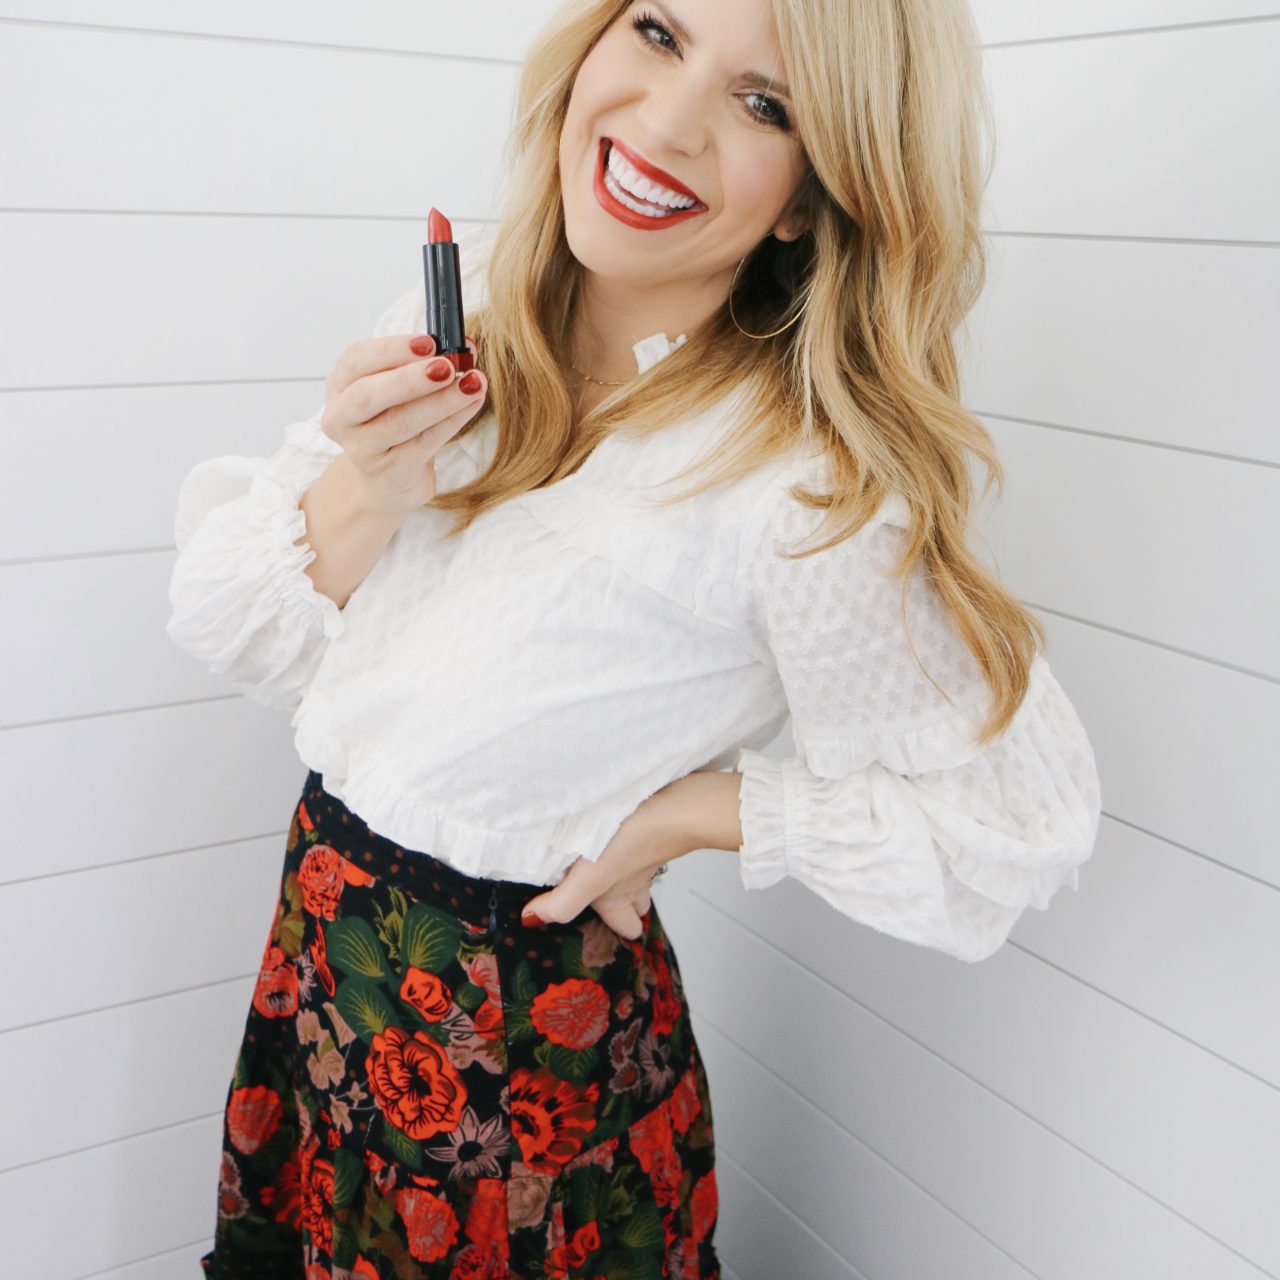 The Perfect Drugstore Red Lipsticks